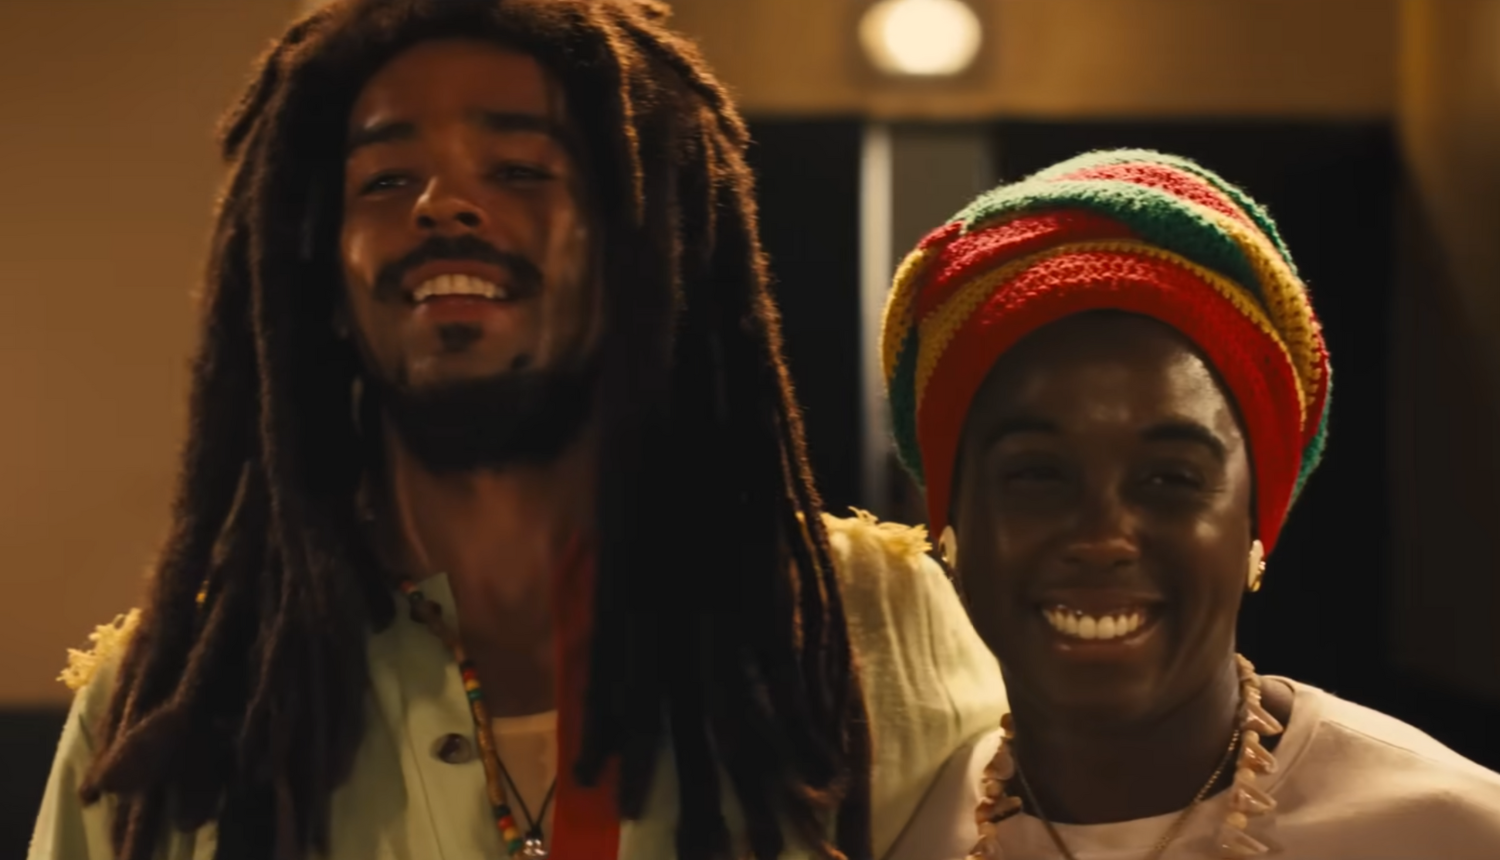 The Birth of Reggae and Bob Marley